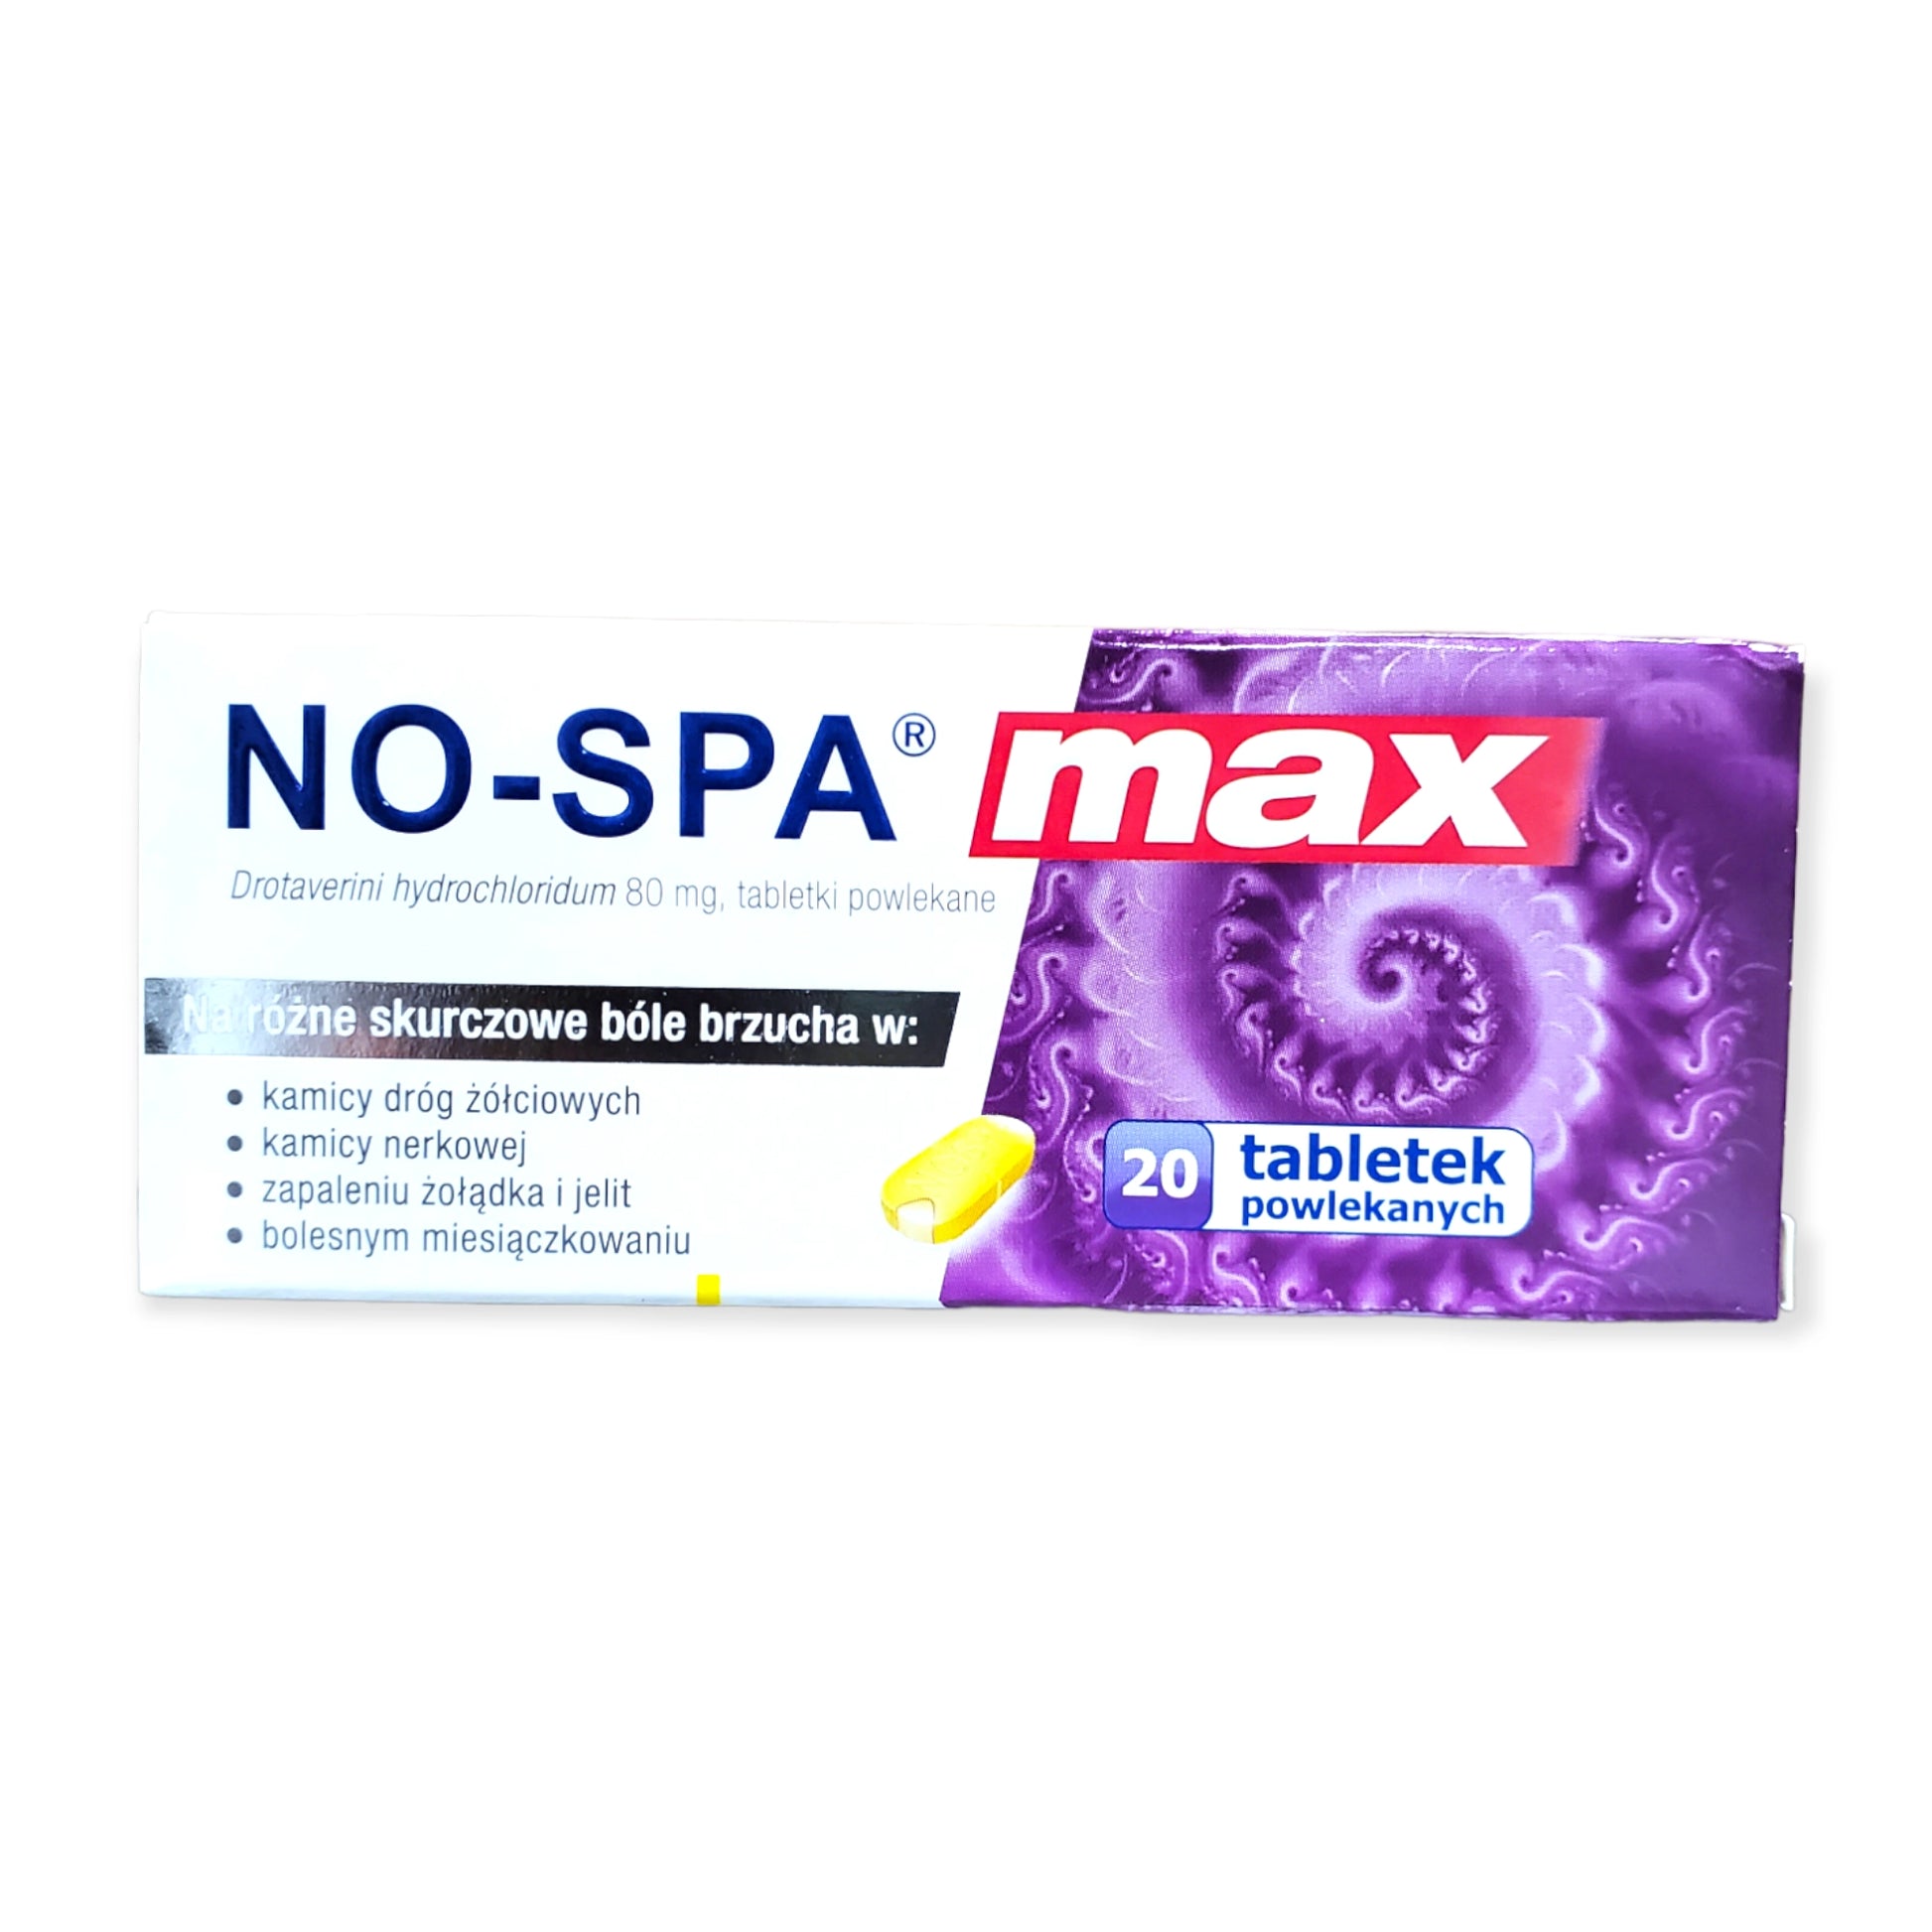 No-spa max tablets